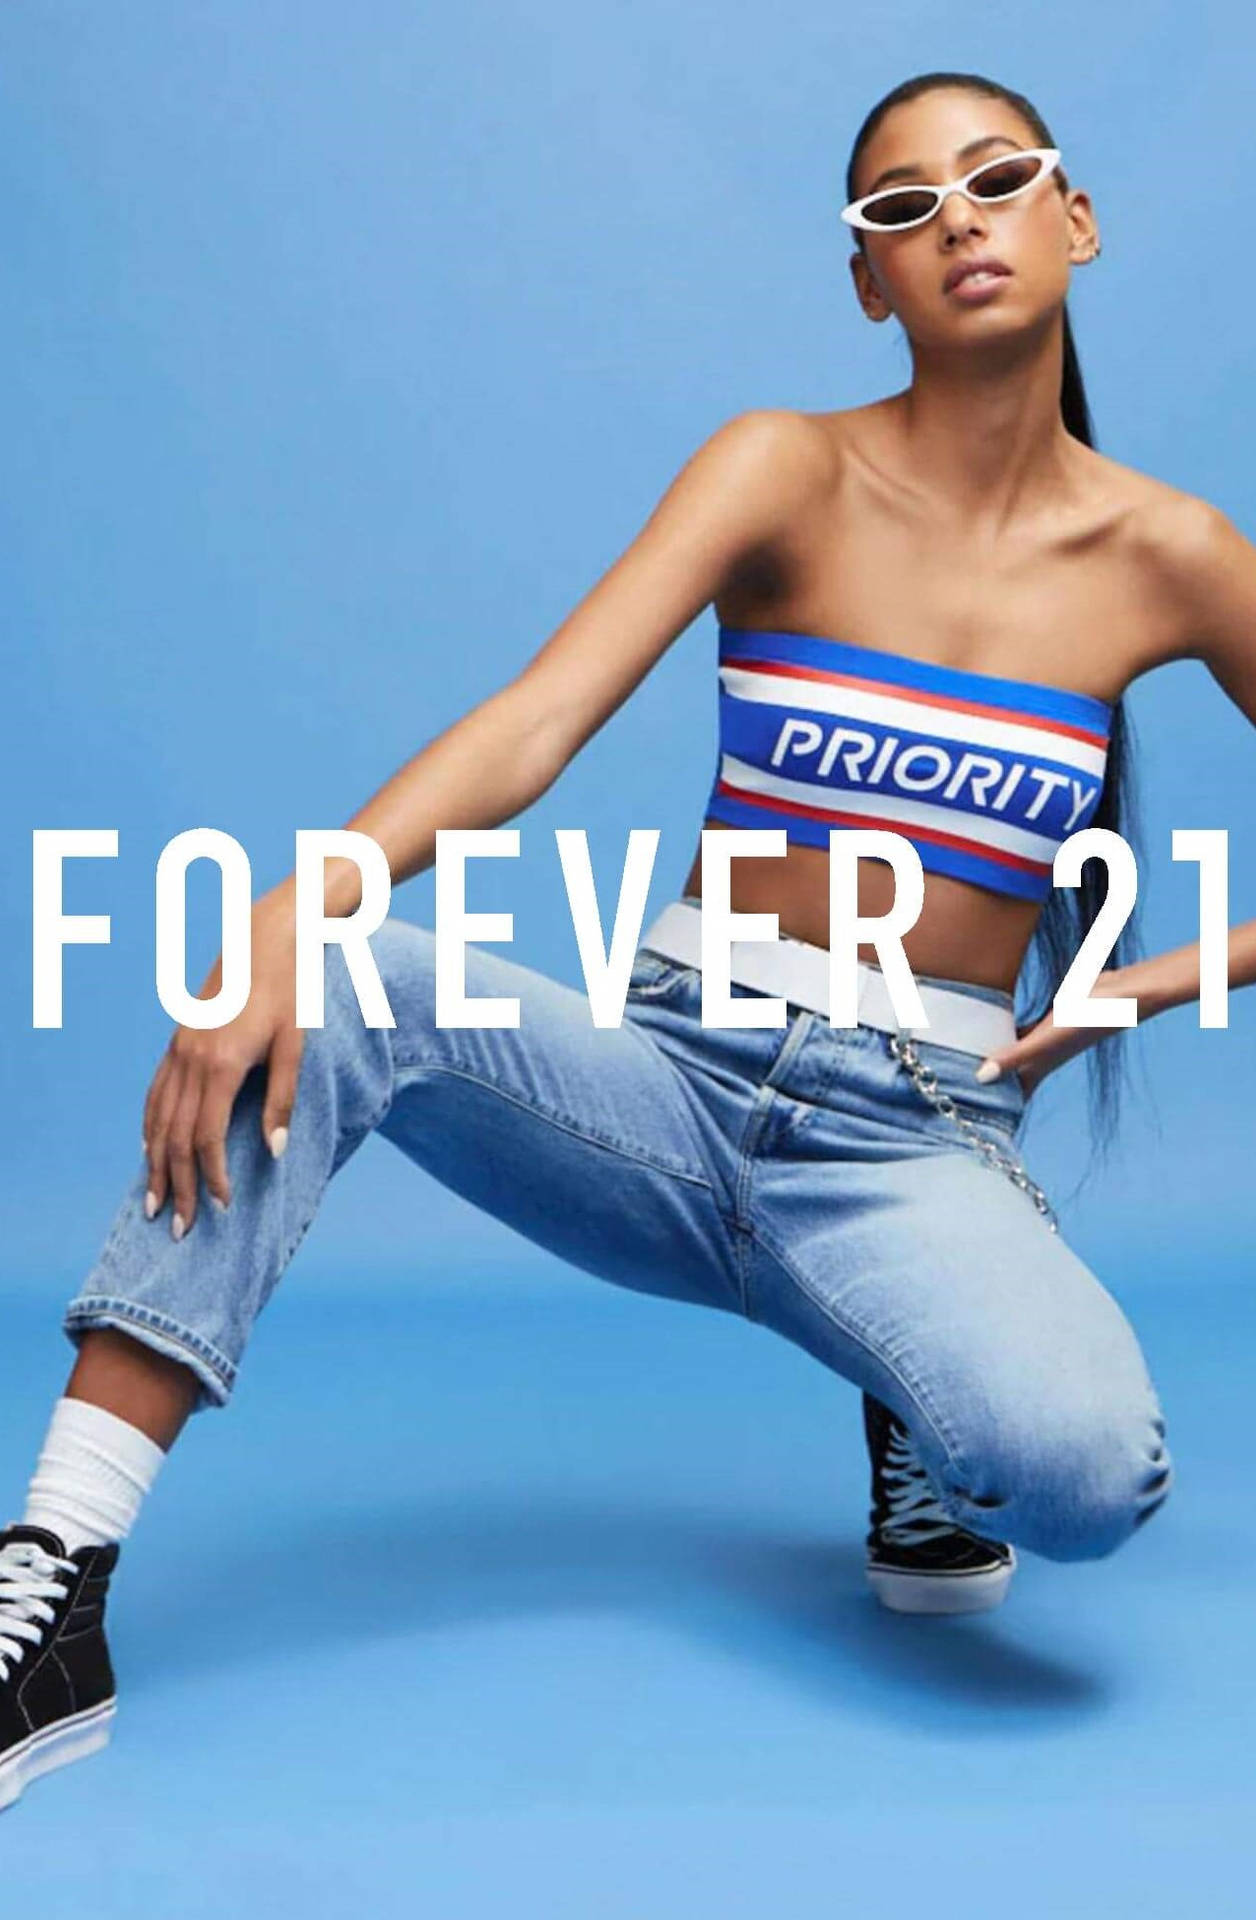 Forever 21 Trendy Clothing Poster